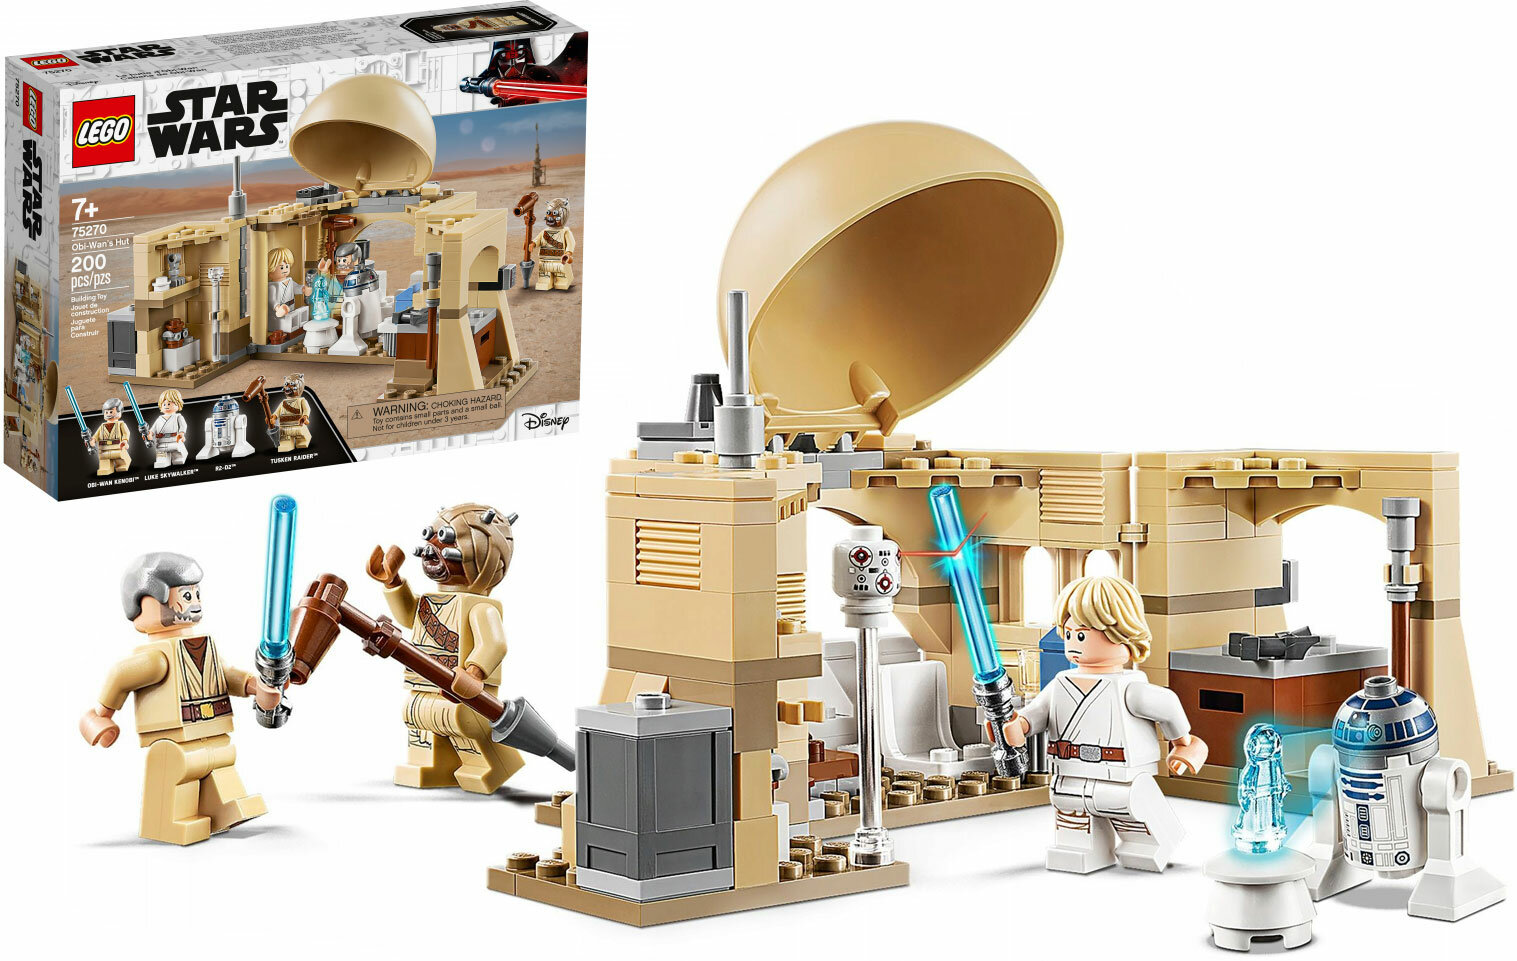 LEGO Star Wars 75270 Хижина Оби-Вана Кеноби, 200 дет.